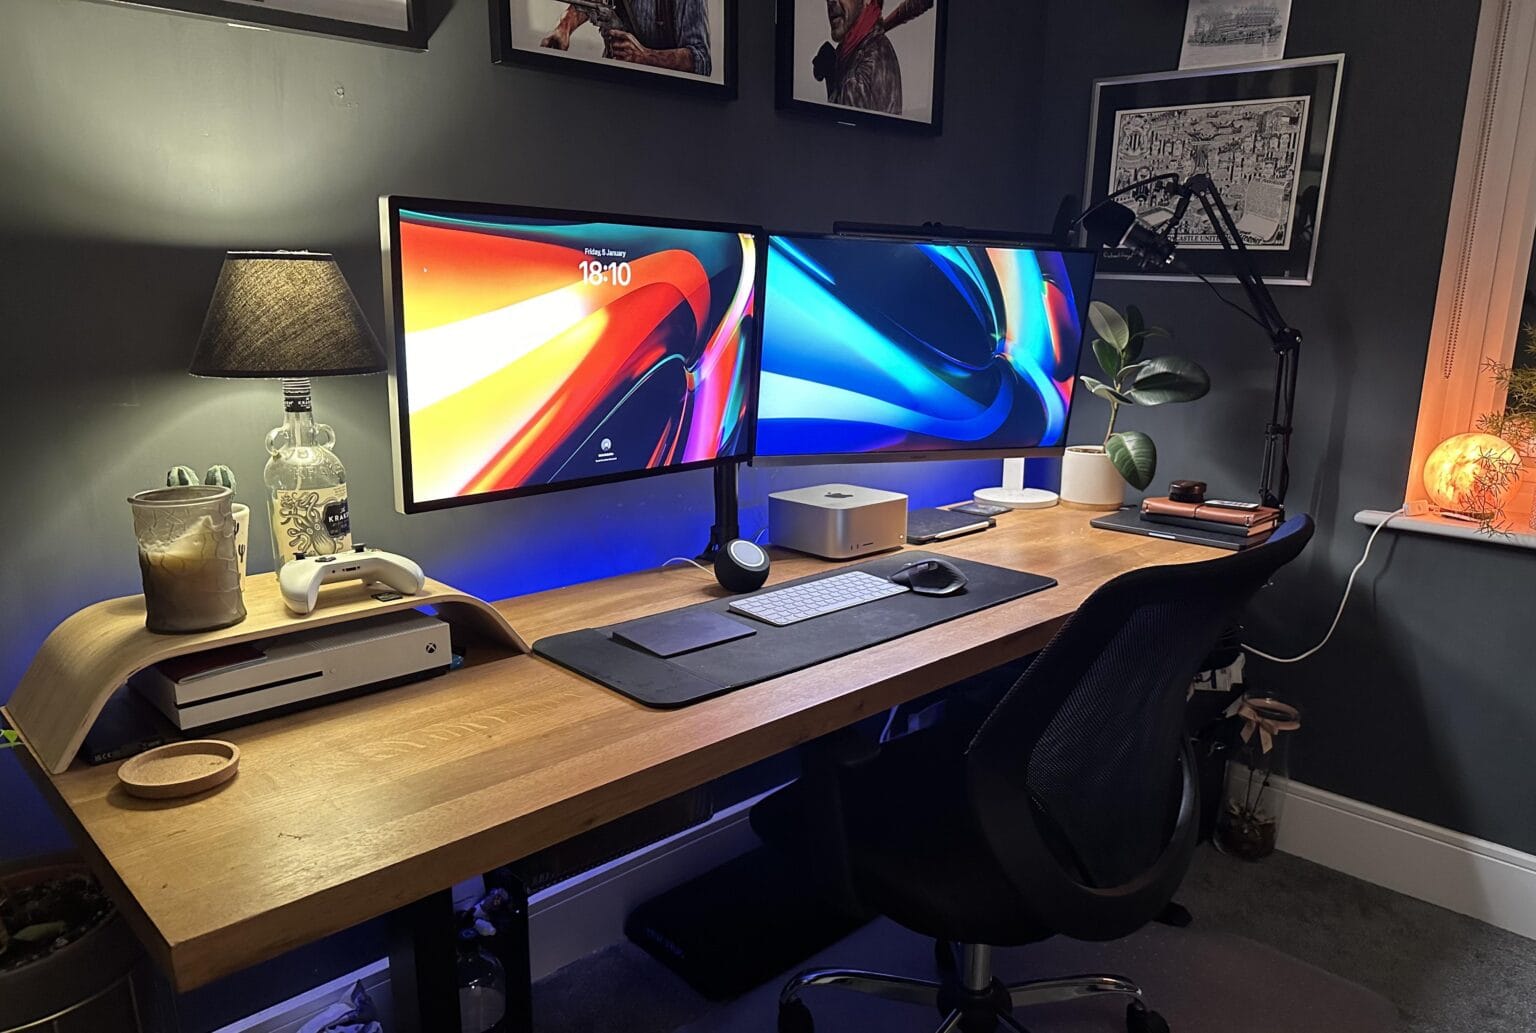 Mac Studio setup with 5K Studio Display and 4K Samsung monitor